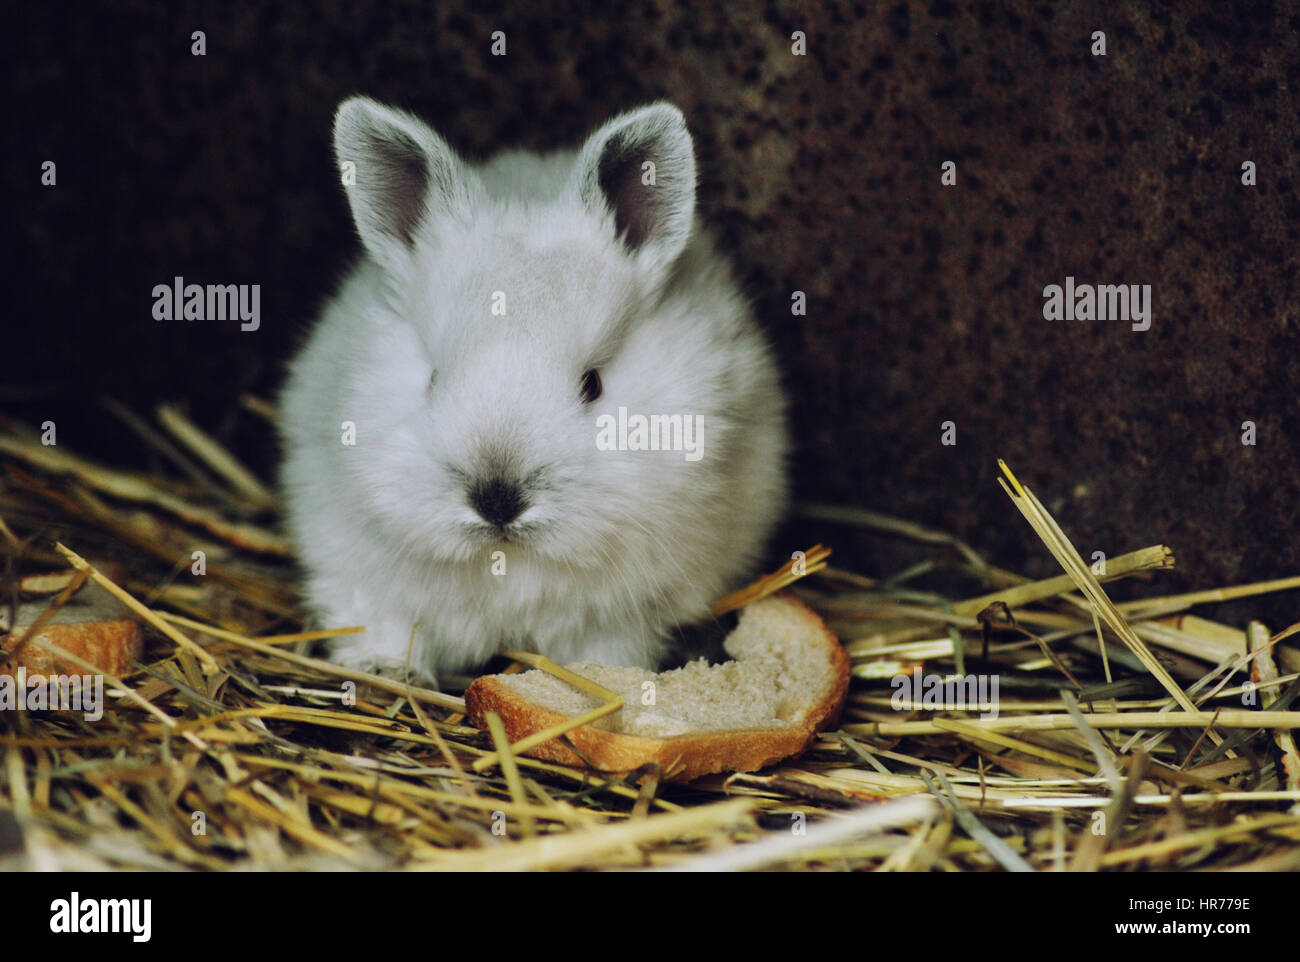 Beautiful white rabbit eating bread. Stock Photo